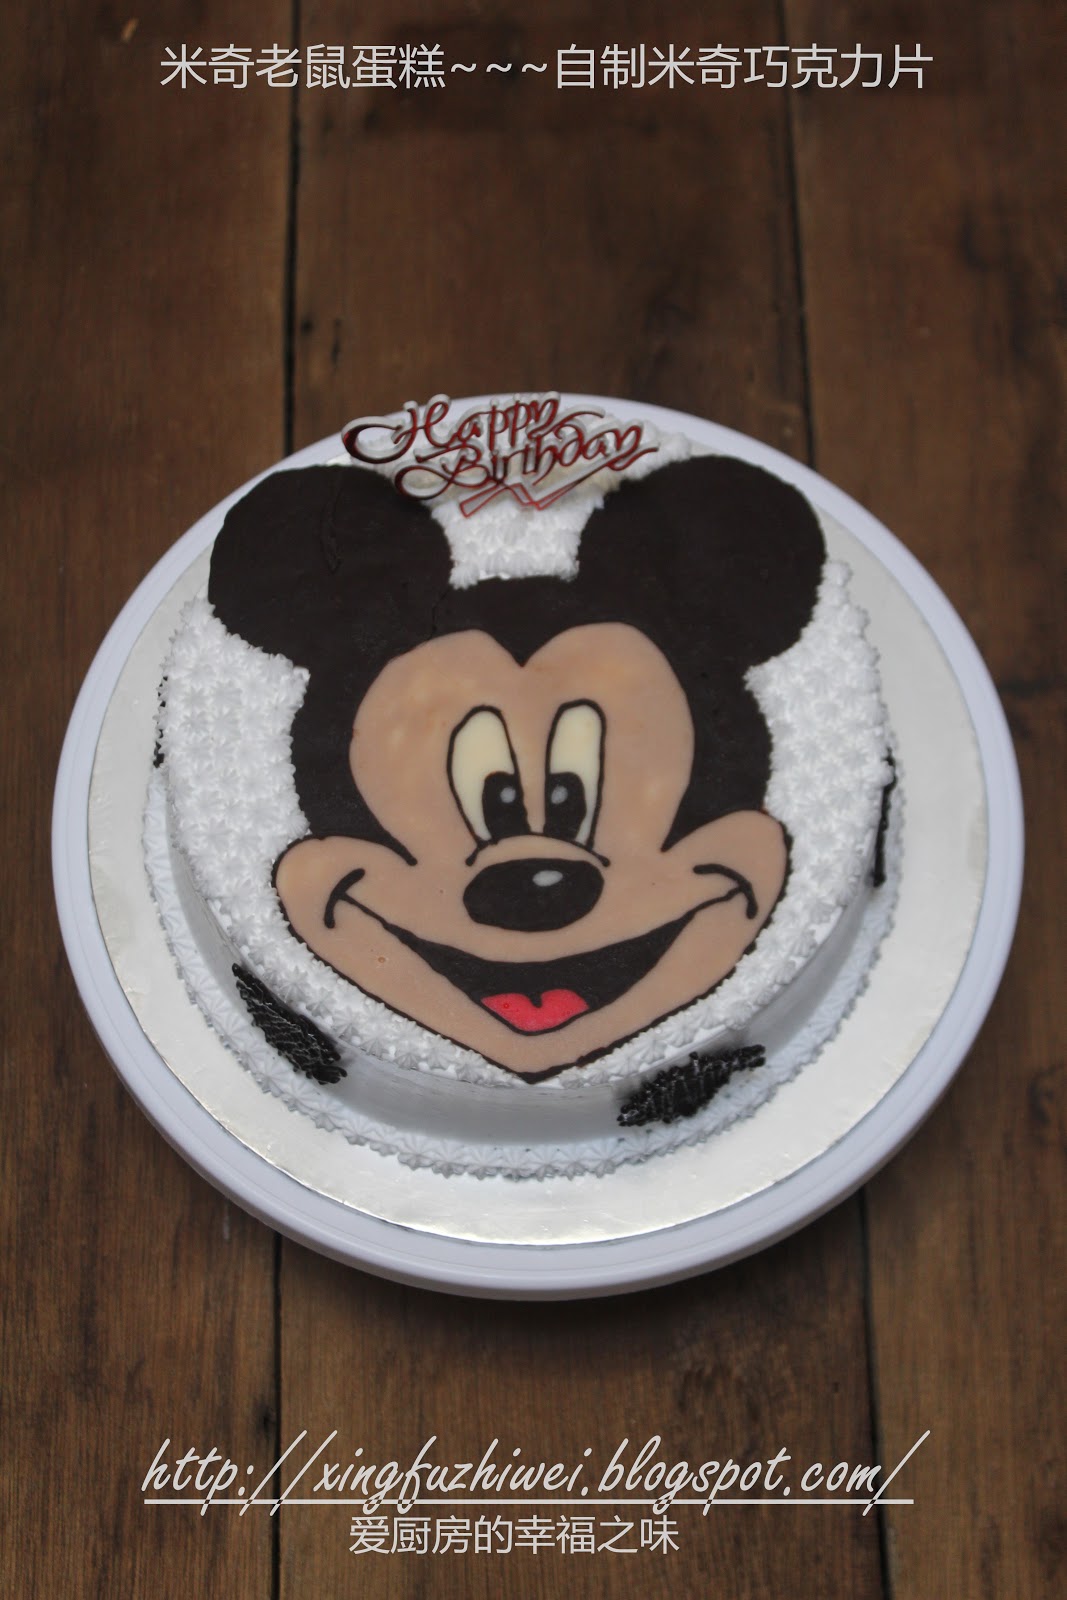 Cakestory 蛋糕物語: 老鼠蛋糕 mouse cake